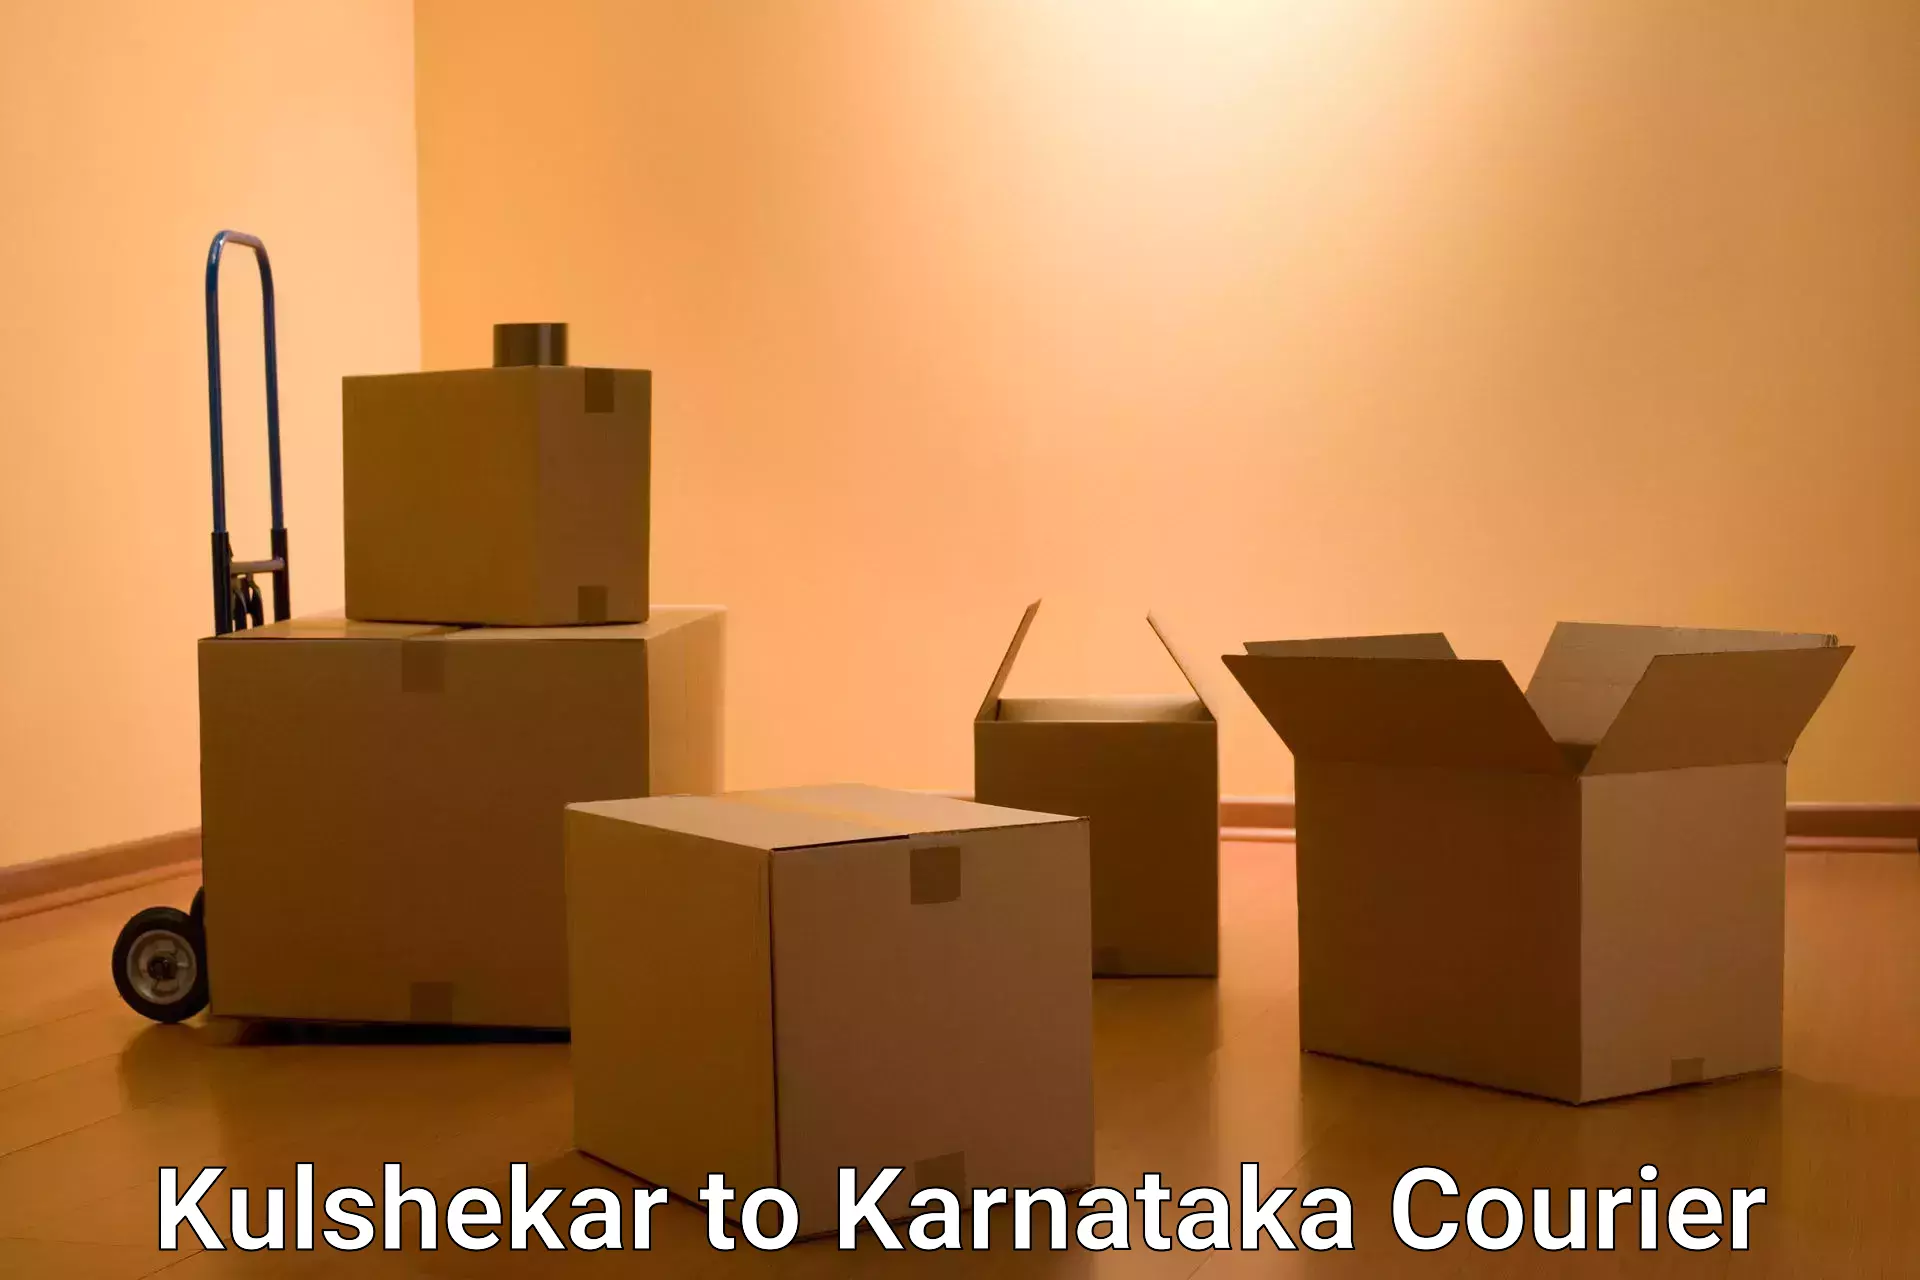 Multi-service courier options Kulshekar to Karnataka